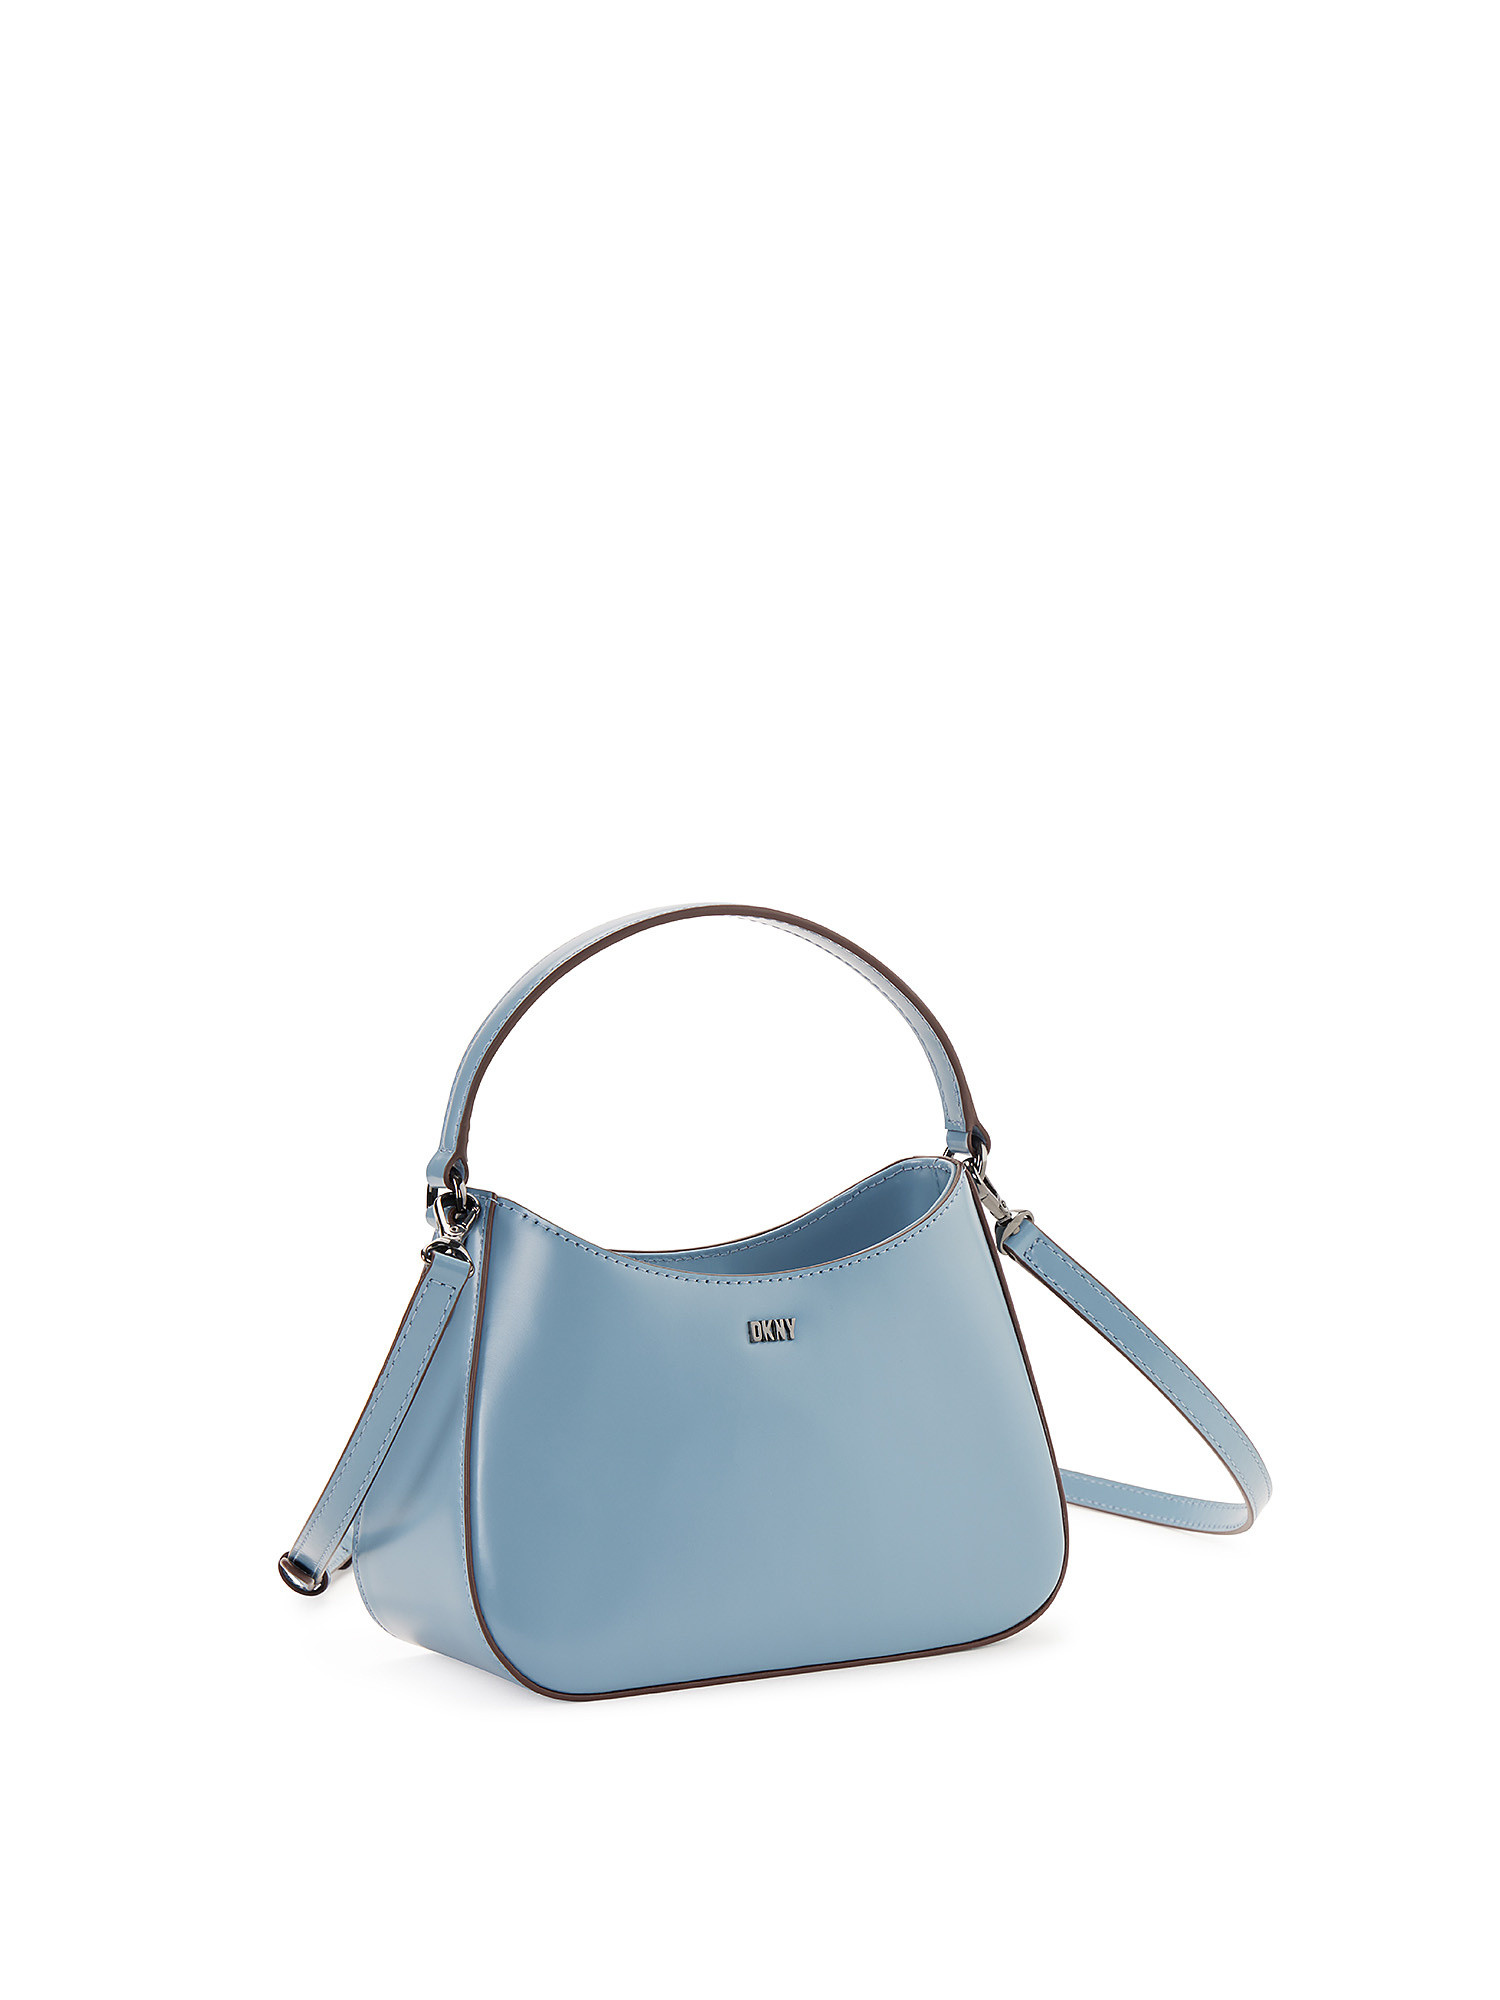 Dkny - Ellie bag with removable tarcolla, Light Blue, large image number 1